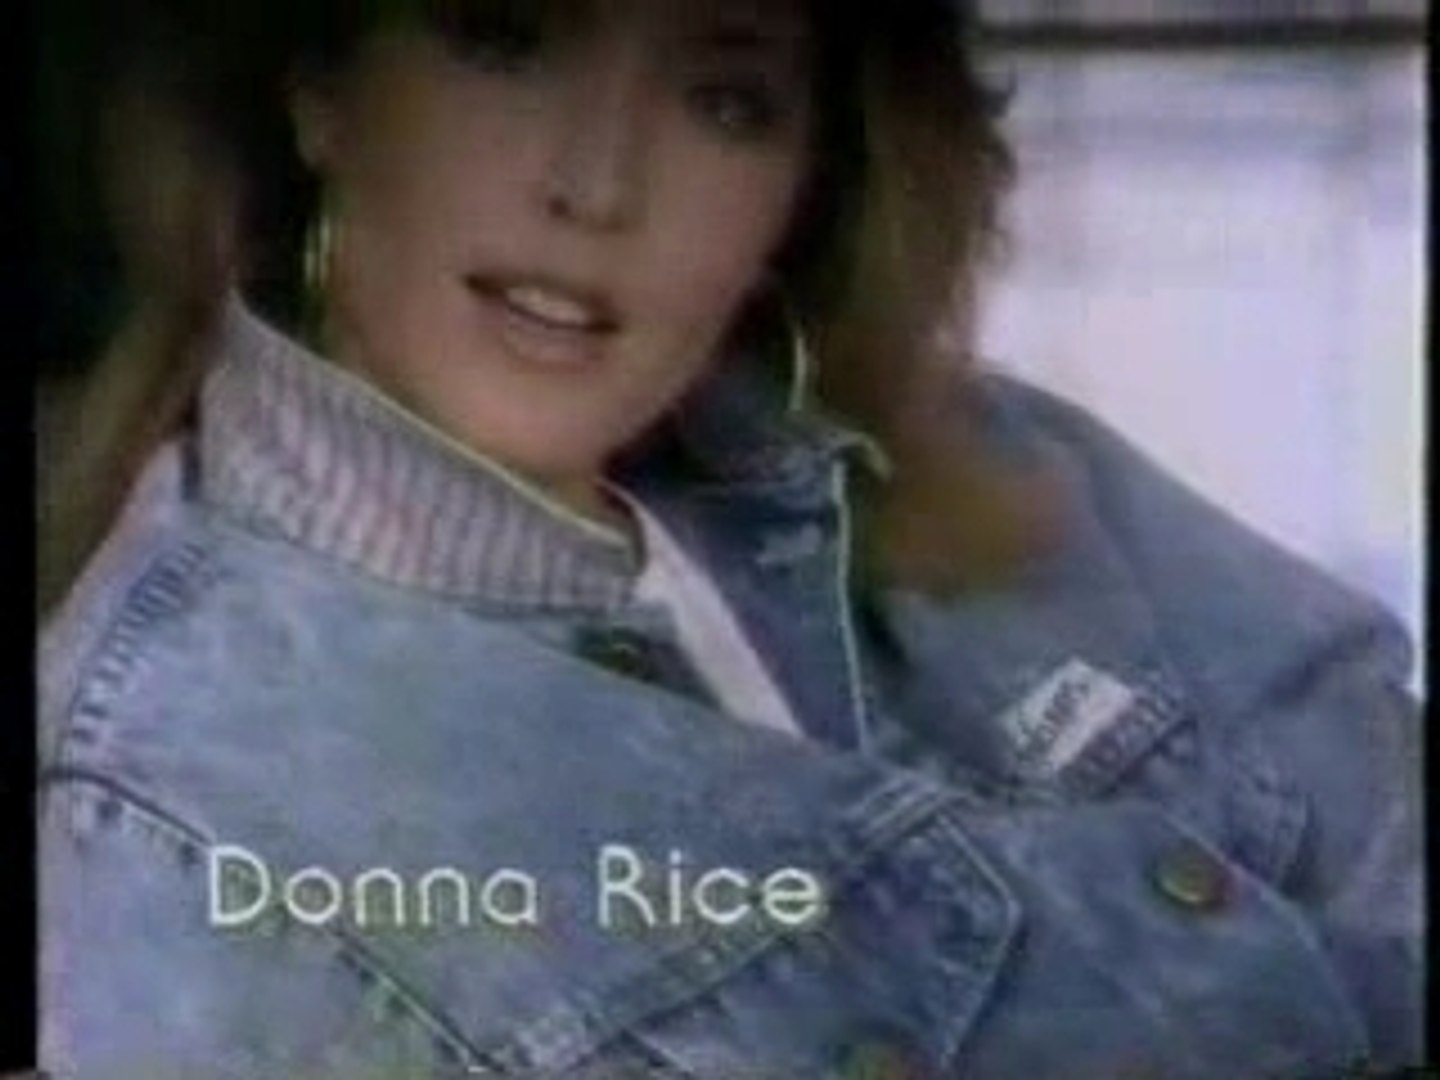 Donna rice photos